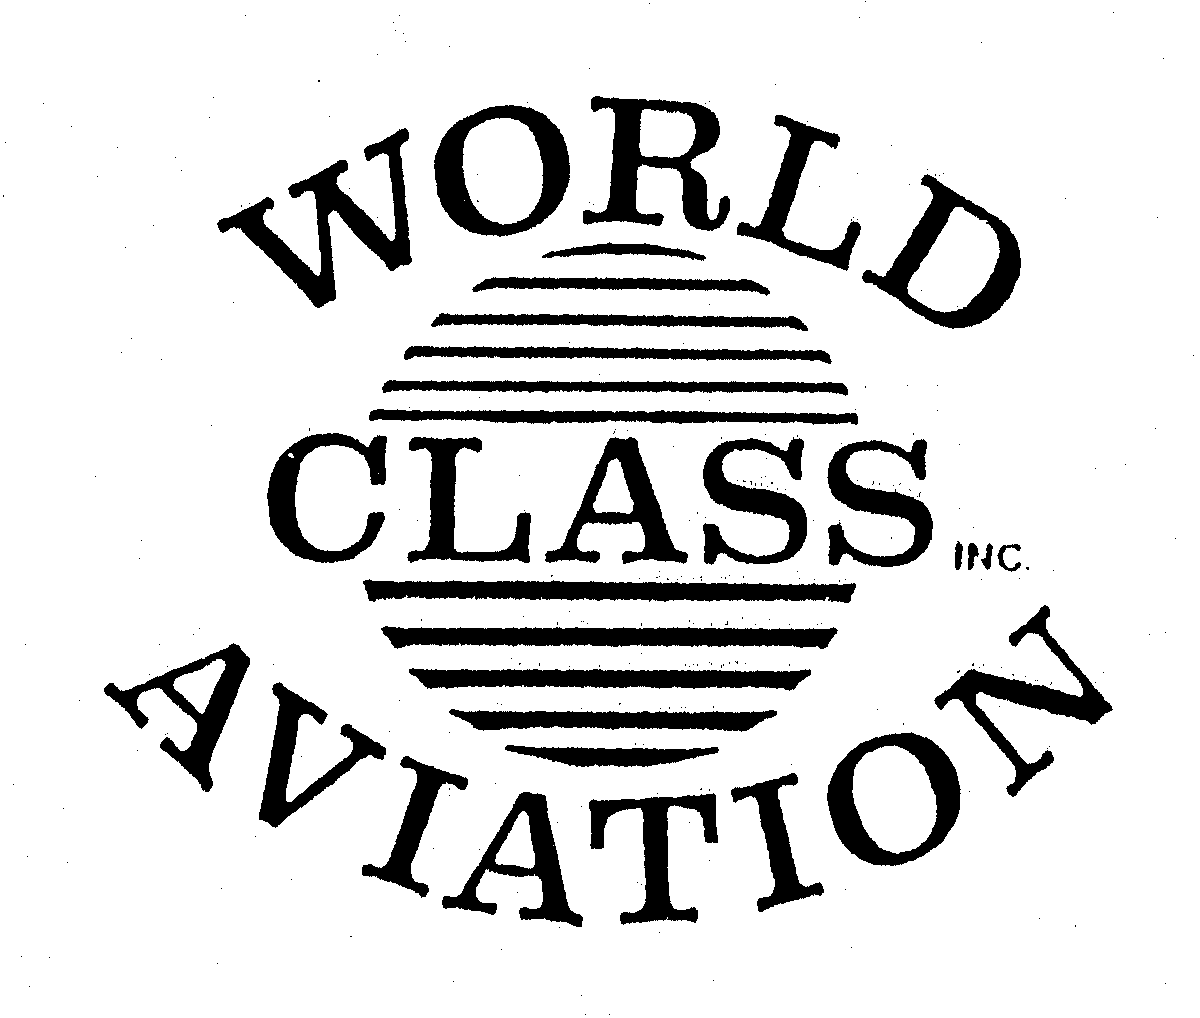  WORLD CLASS AVIATION INC.